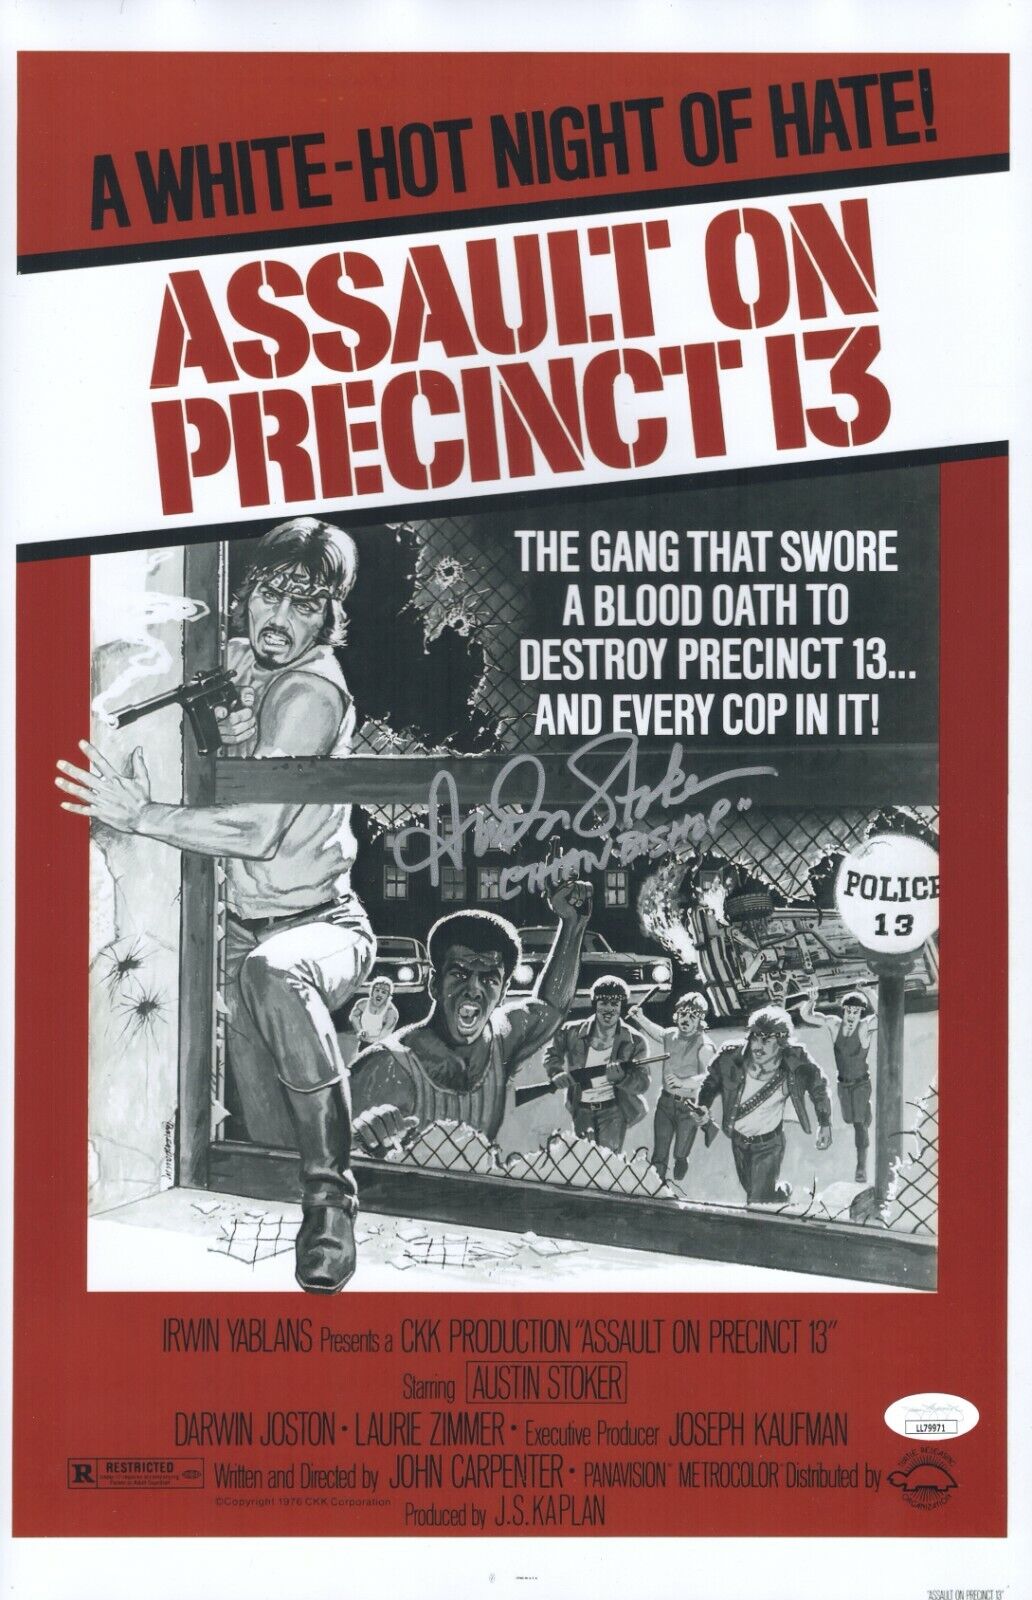 AUSTIN STOKER Signed ASSAULT ON PRECINCT 13 Photo Poster painting 11x17 Autograph JSA COA Cert